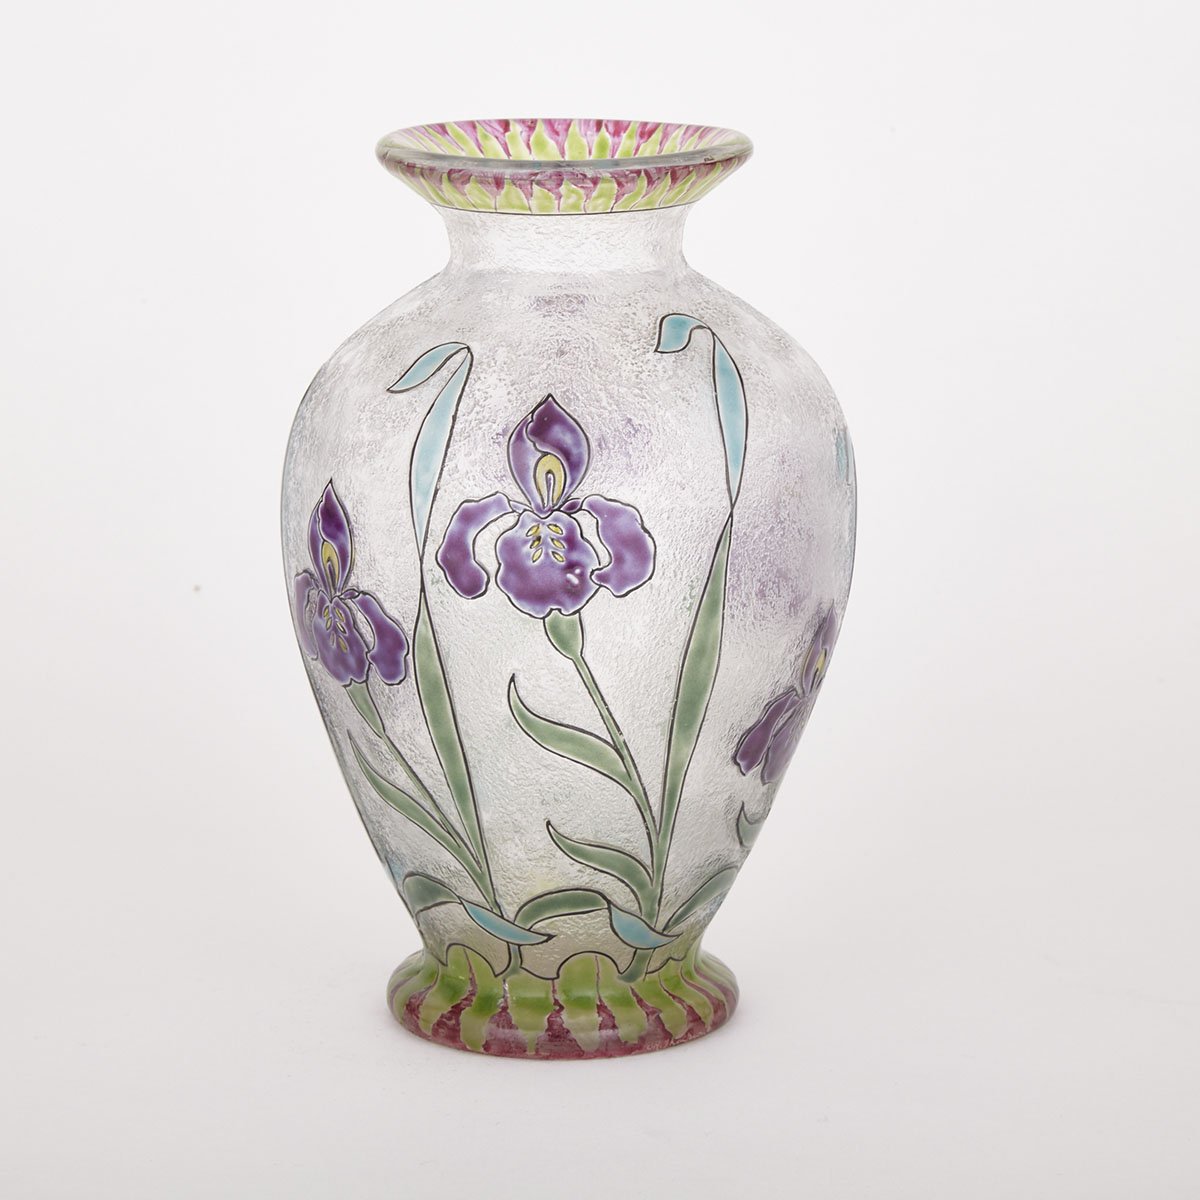 Webb & Corbett ‘Verre-sur-Verre’ Enameled Cameo Glass Vase, early 20th century